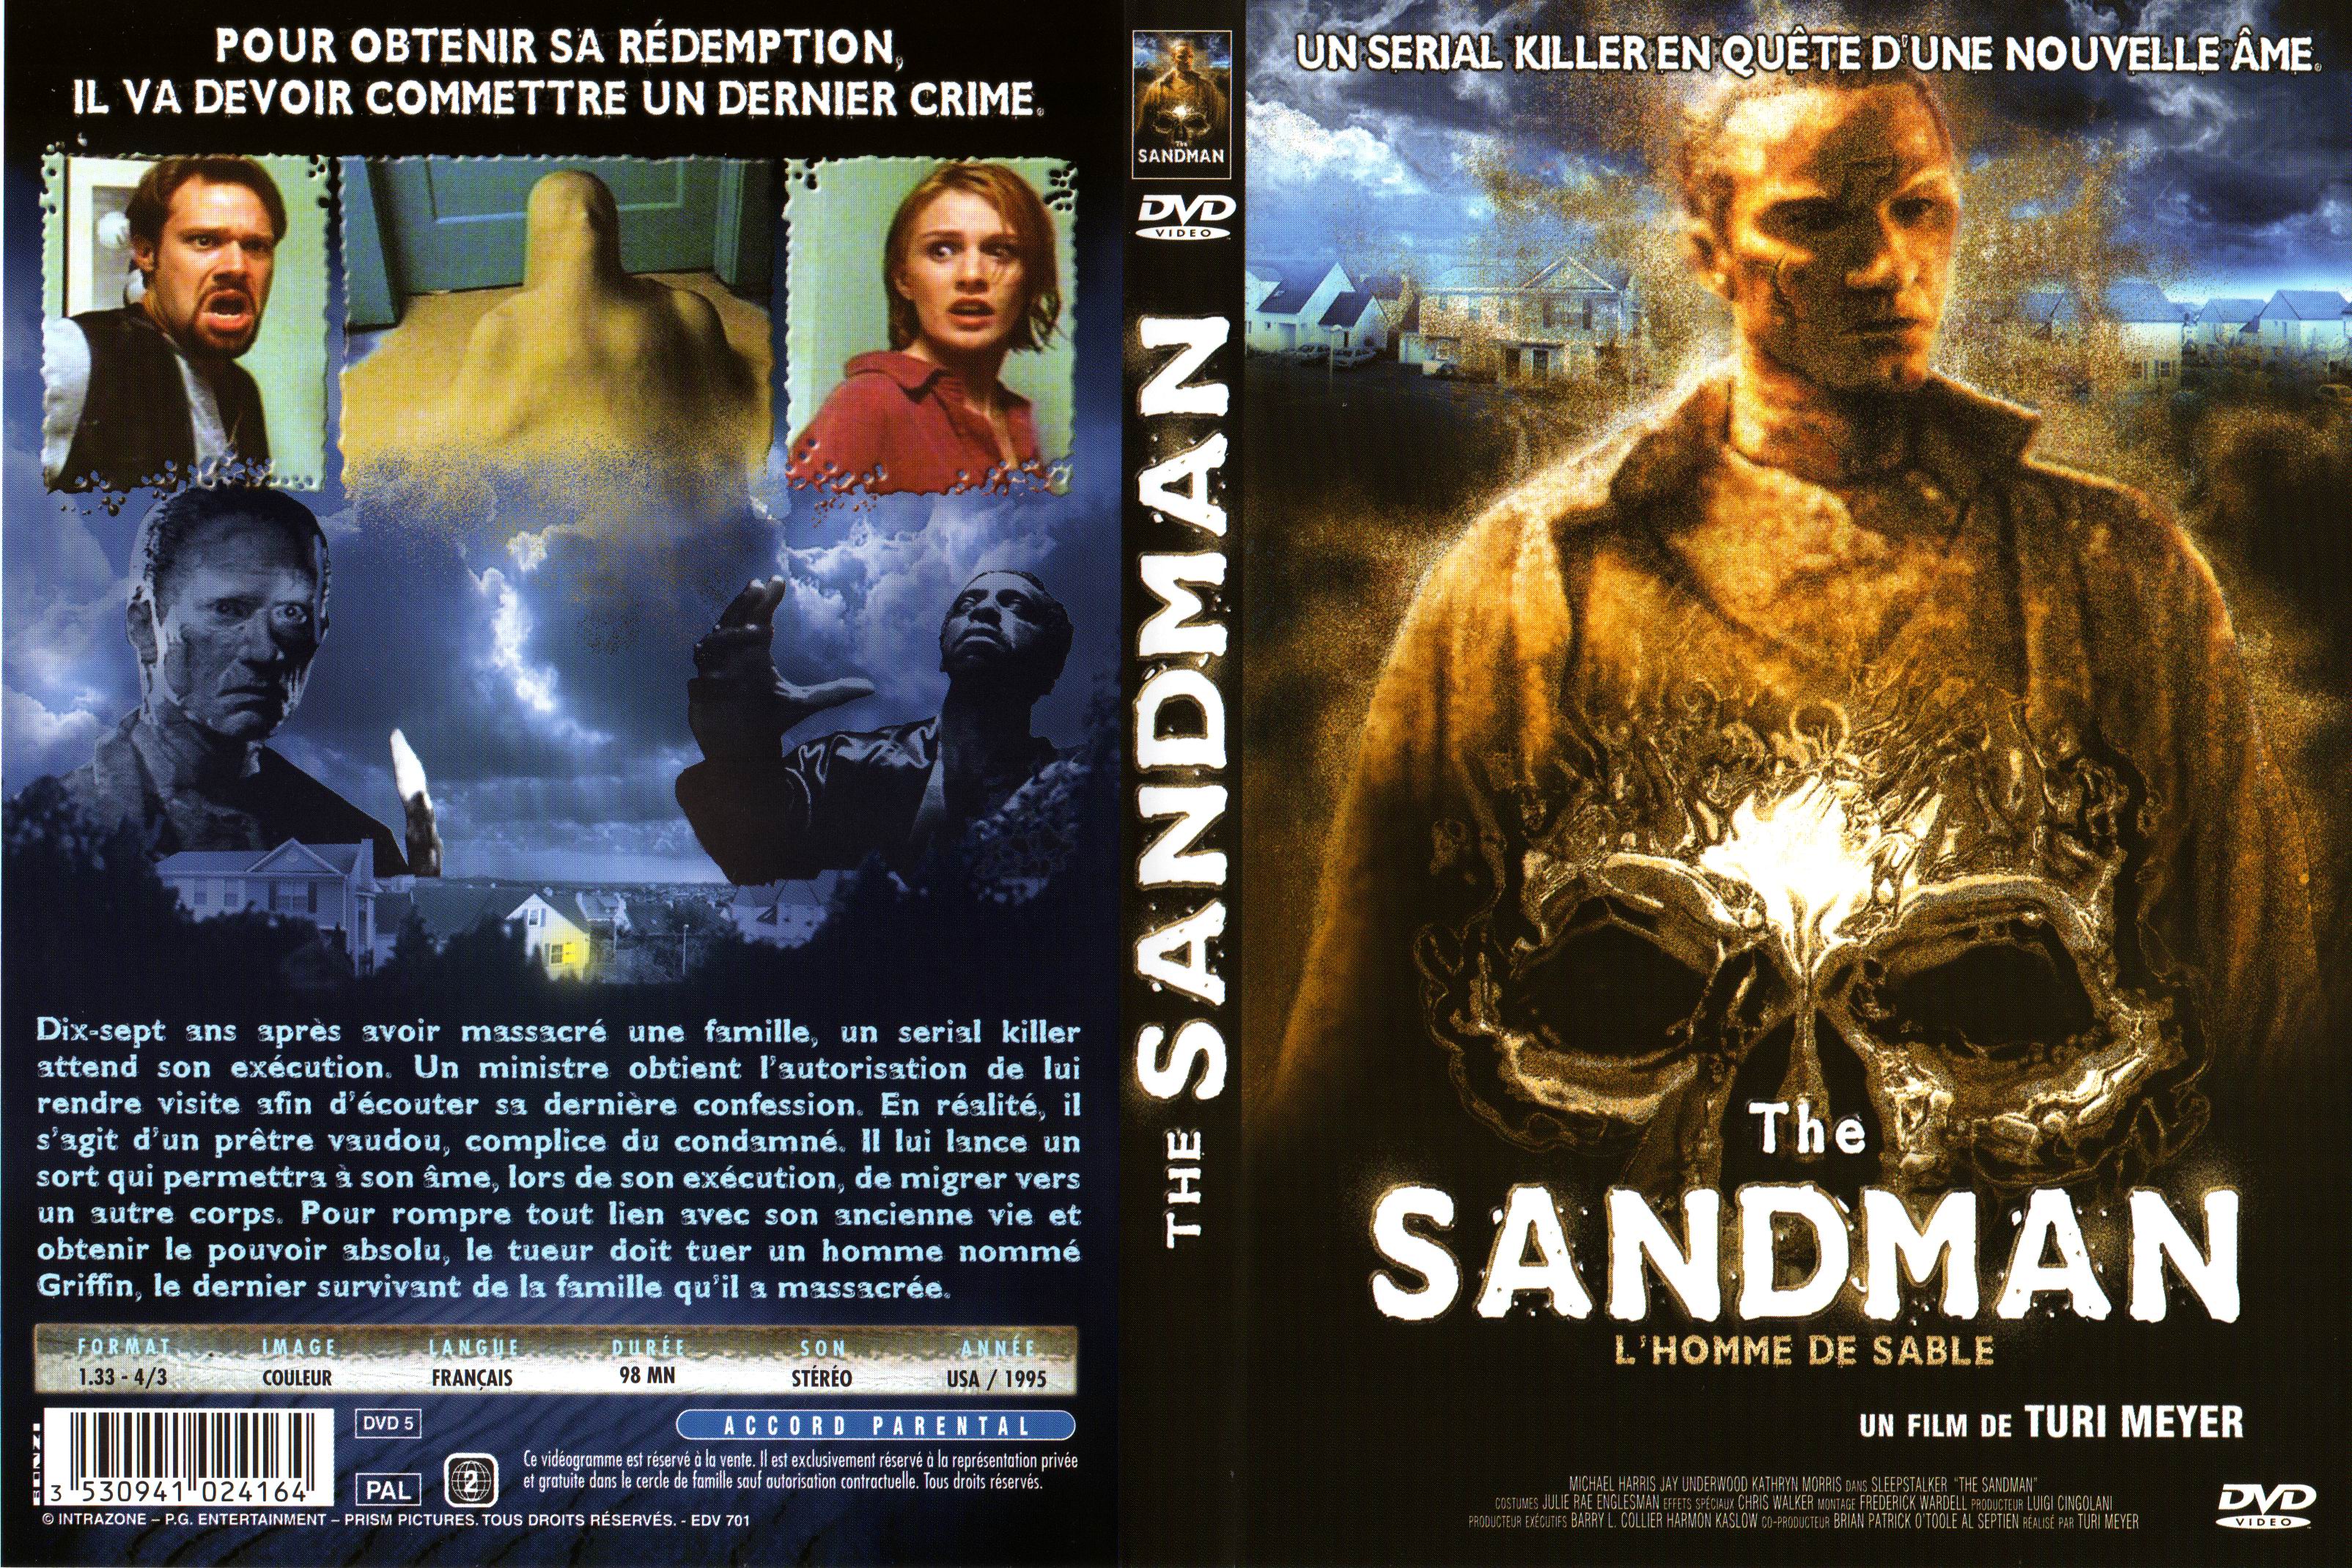 Jaquette DVD The sandman